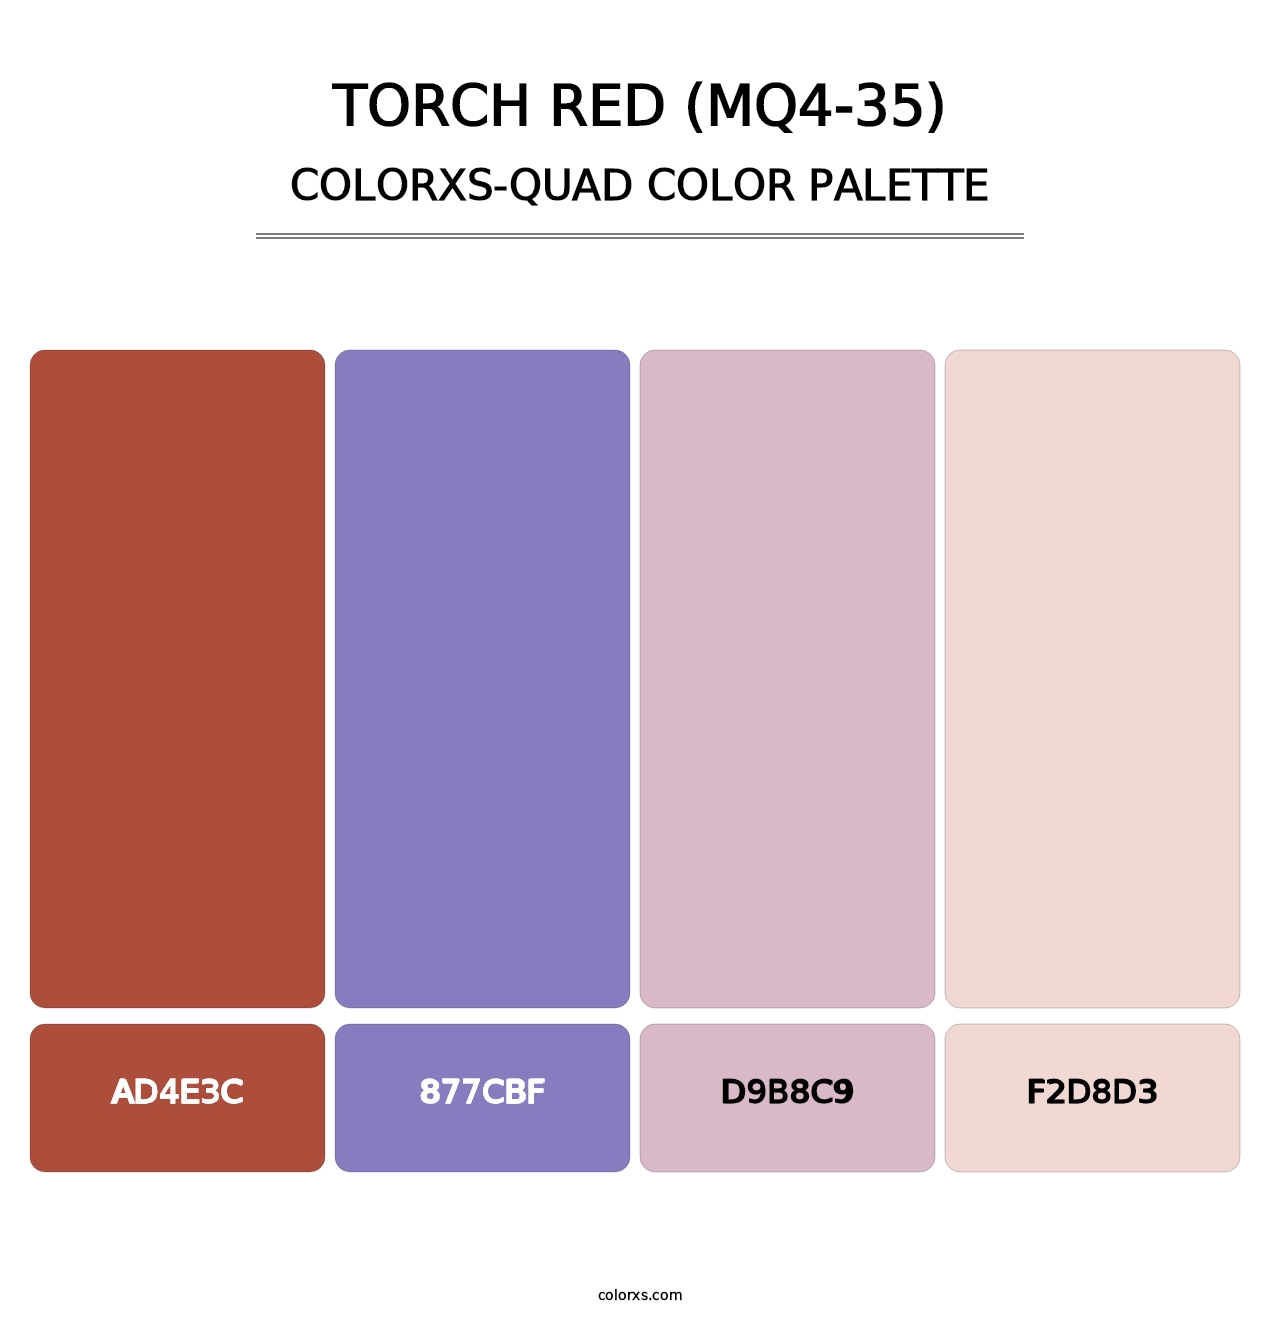 Torch Red (MQ4-35) - Colorxs Quad Palette